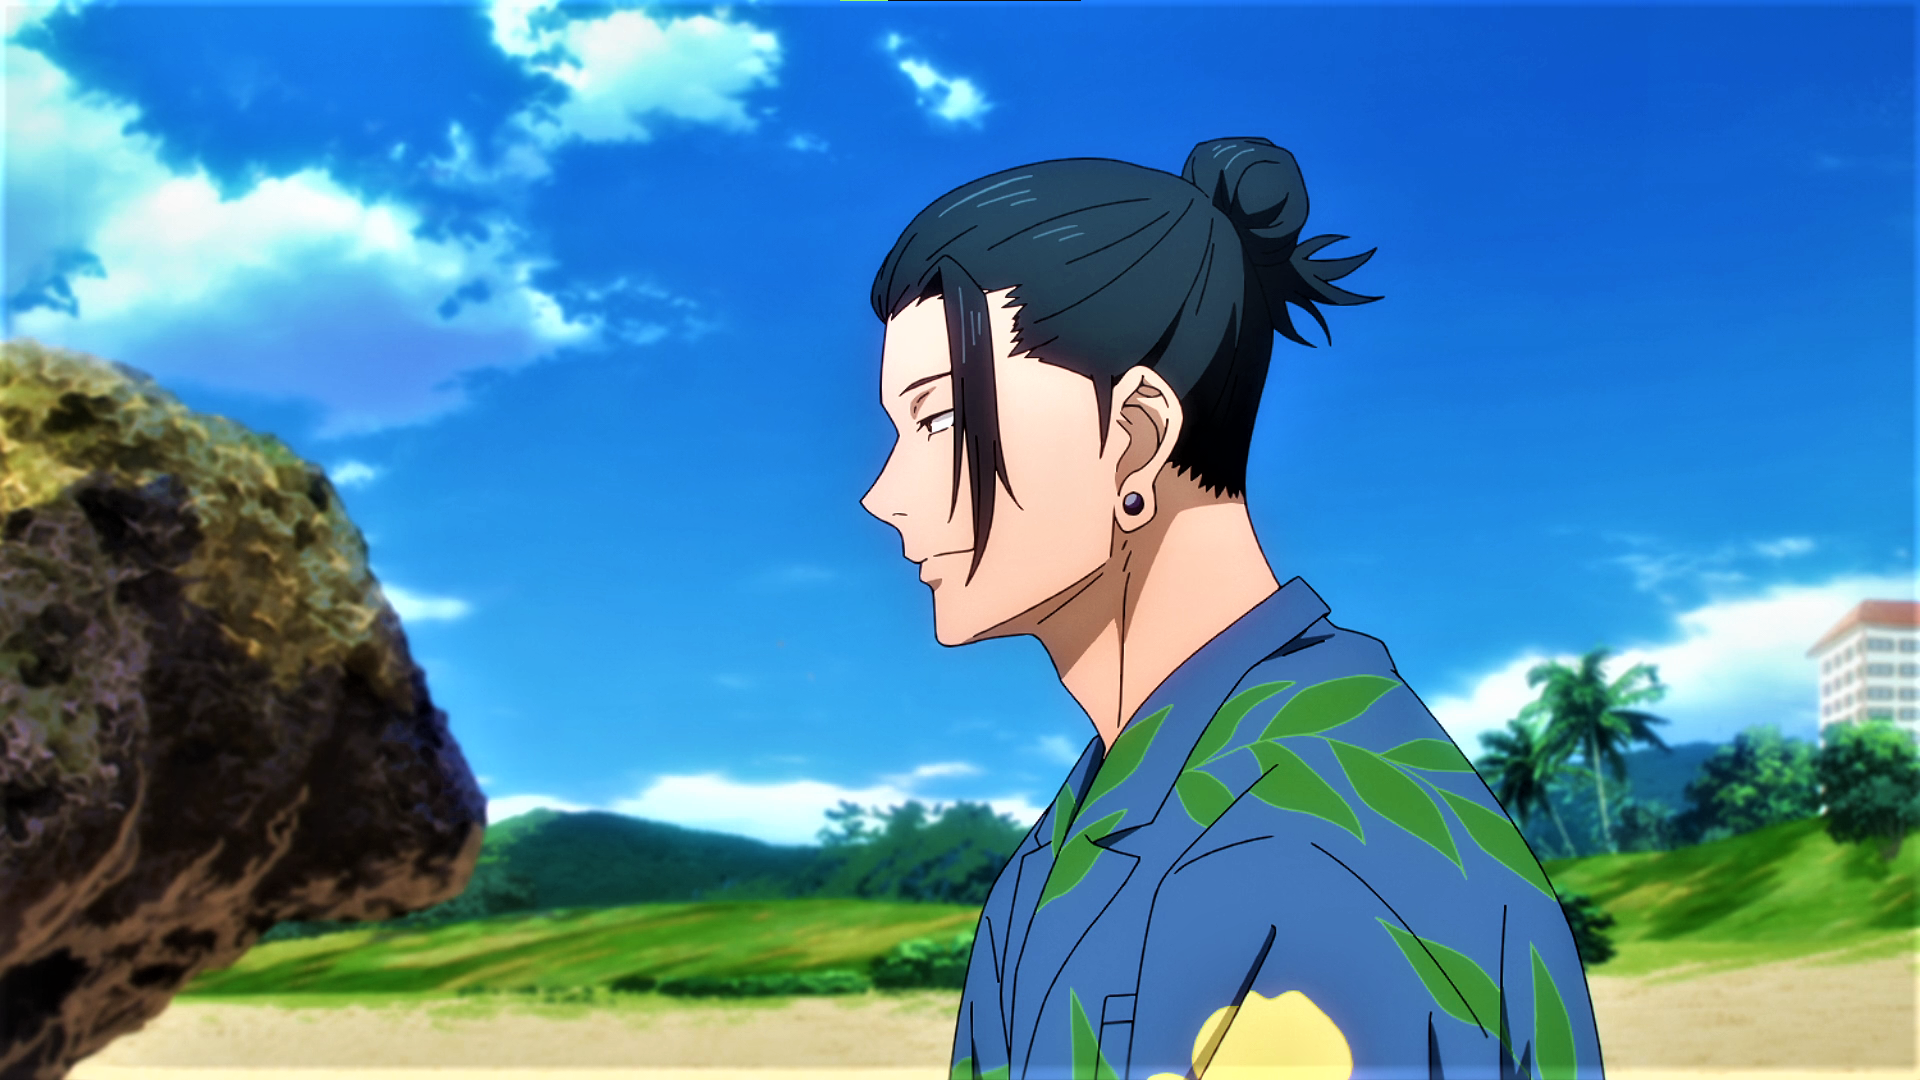 Anime 1920x1080 Jujutsu Kaisen Suguru Geto earring Bun sky clouds palm trees sand anime anime screenshot anime boys